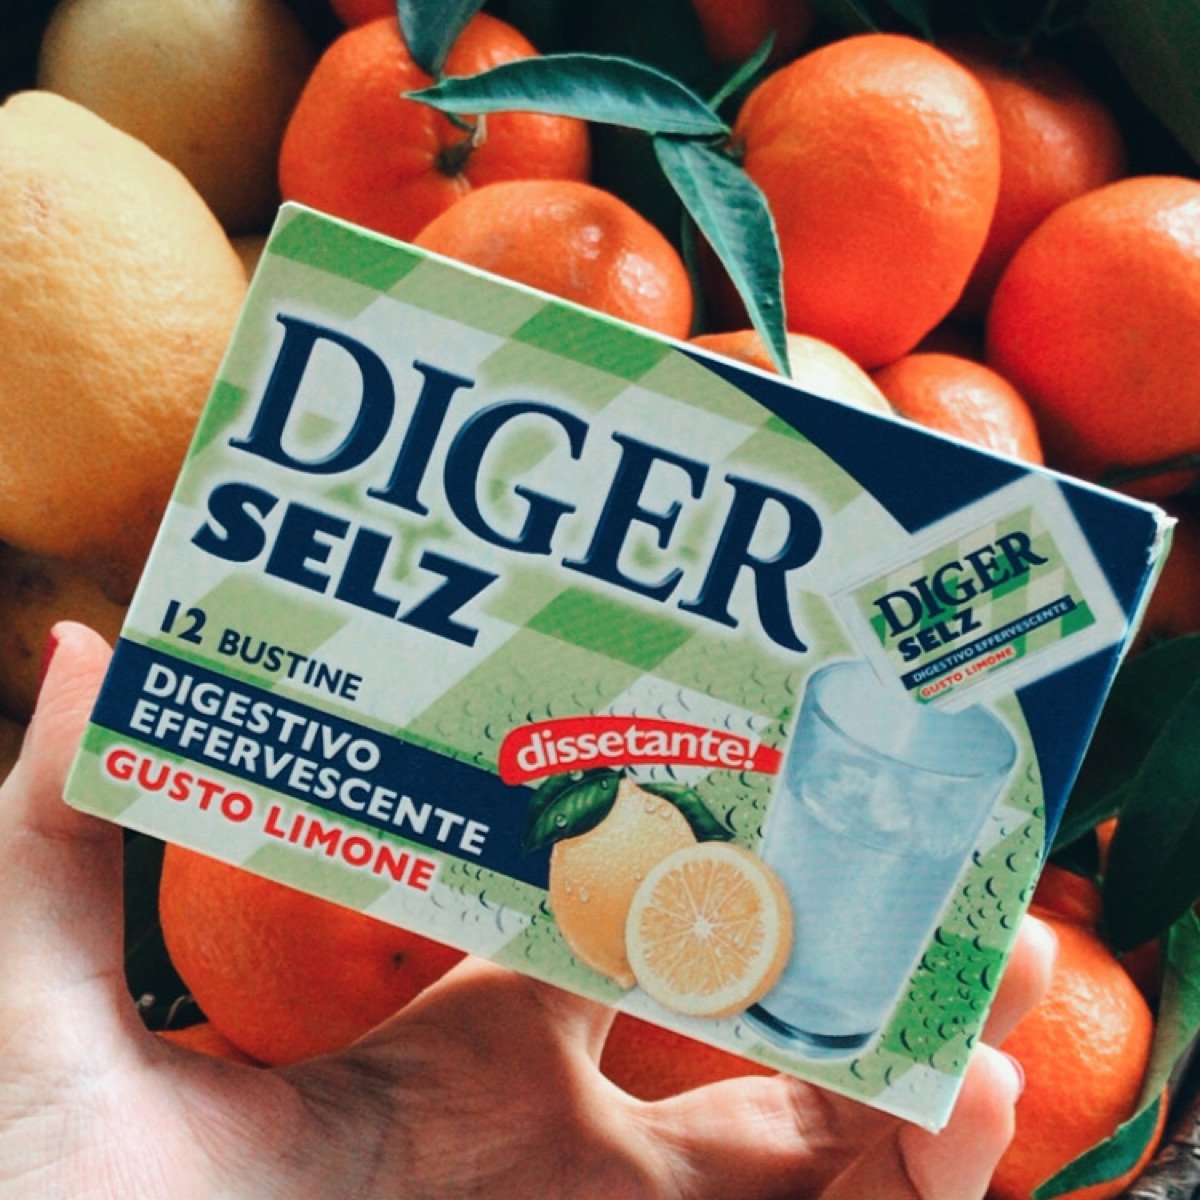 Diger Selz Digestivo effervescente - Gusto limone Reviews